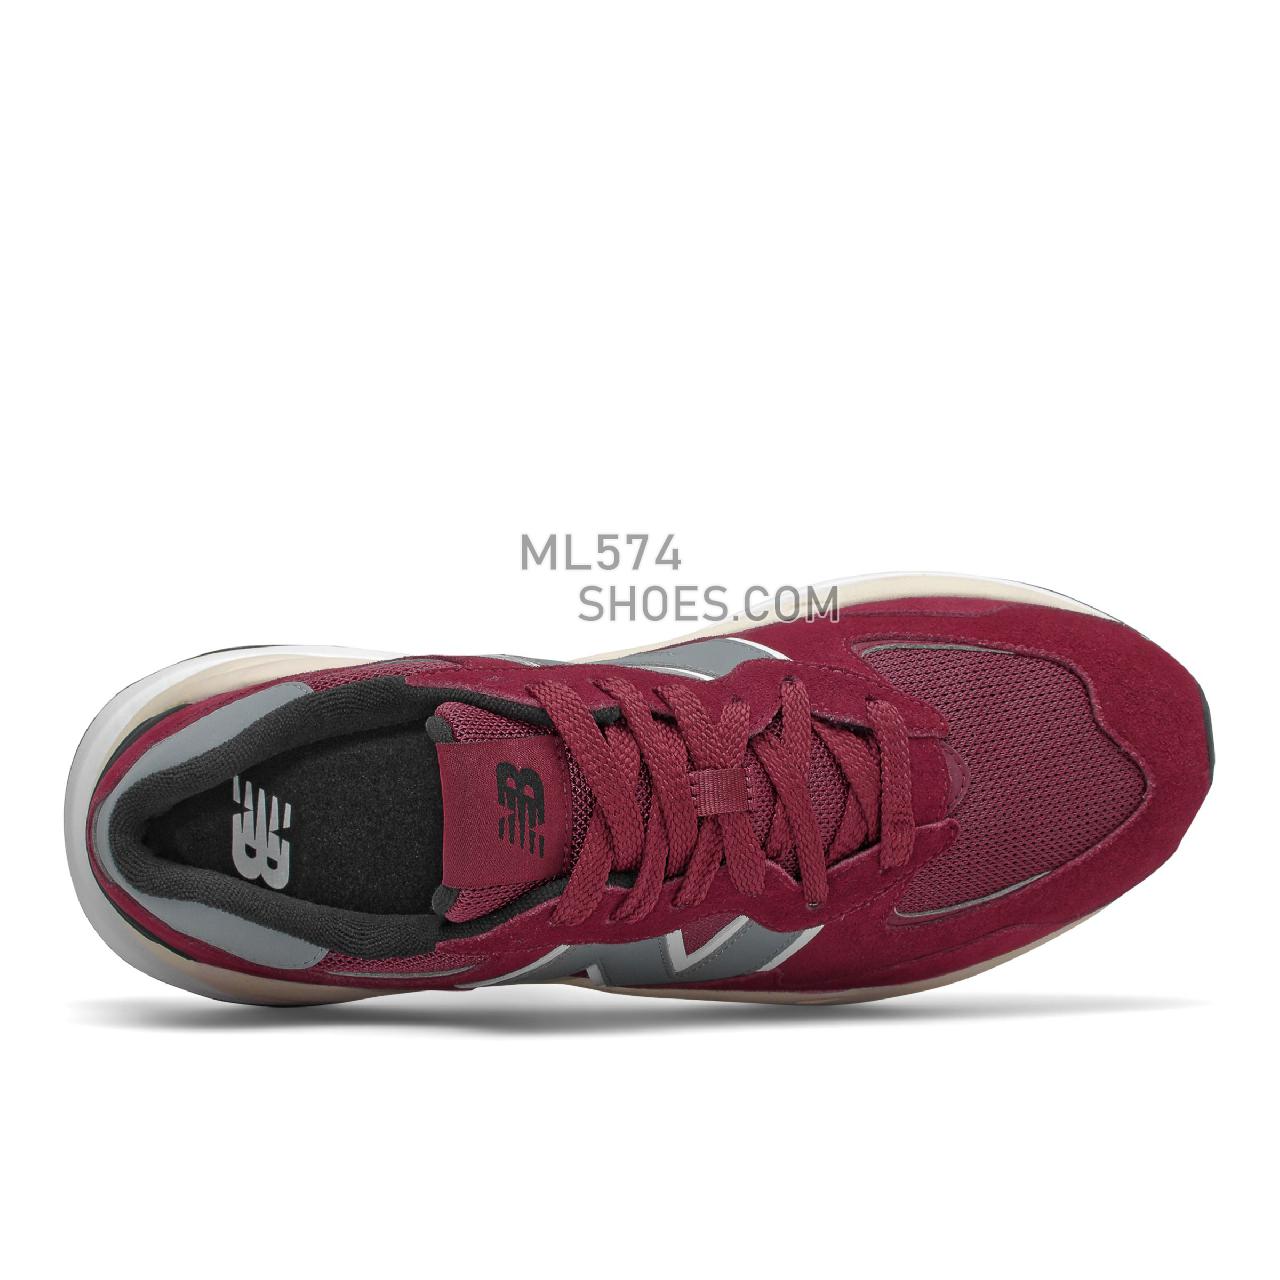 New Balance 57/40 - Men's Sport Style Sneakers - Garnet with Slate - M5740HL1